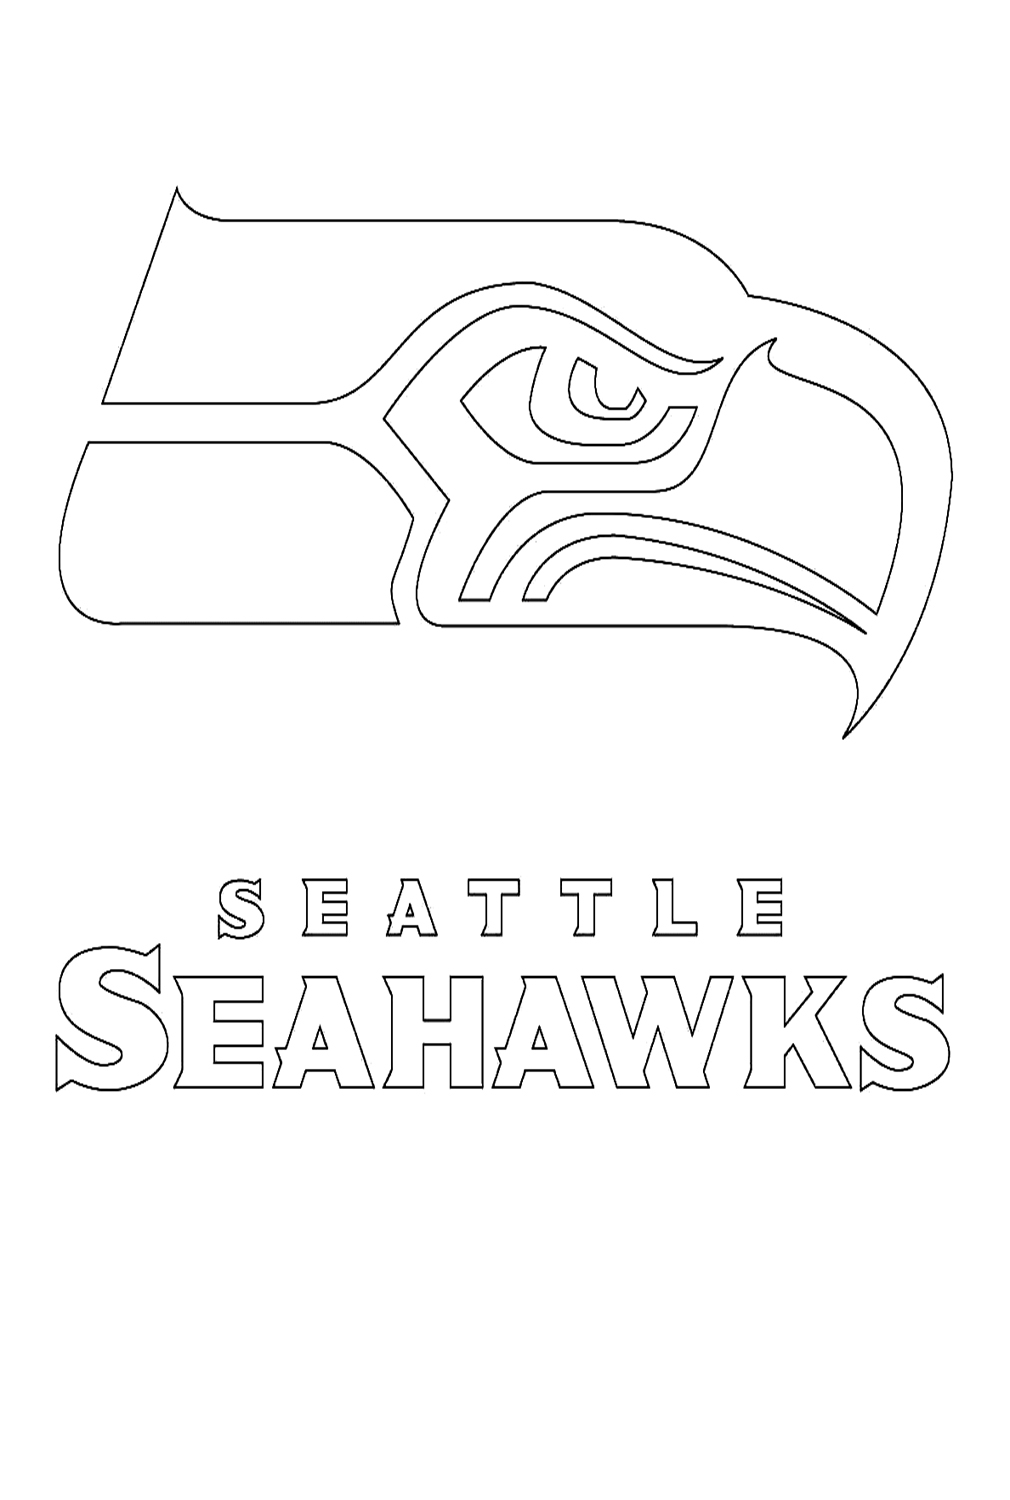 Logotipo do Seattle Seahawks da NFL